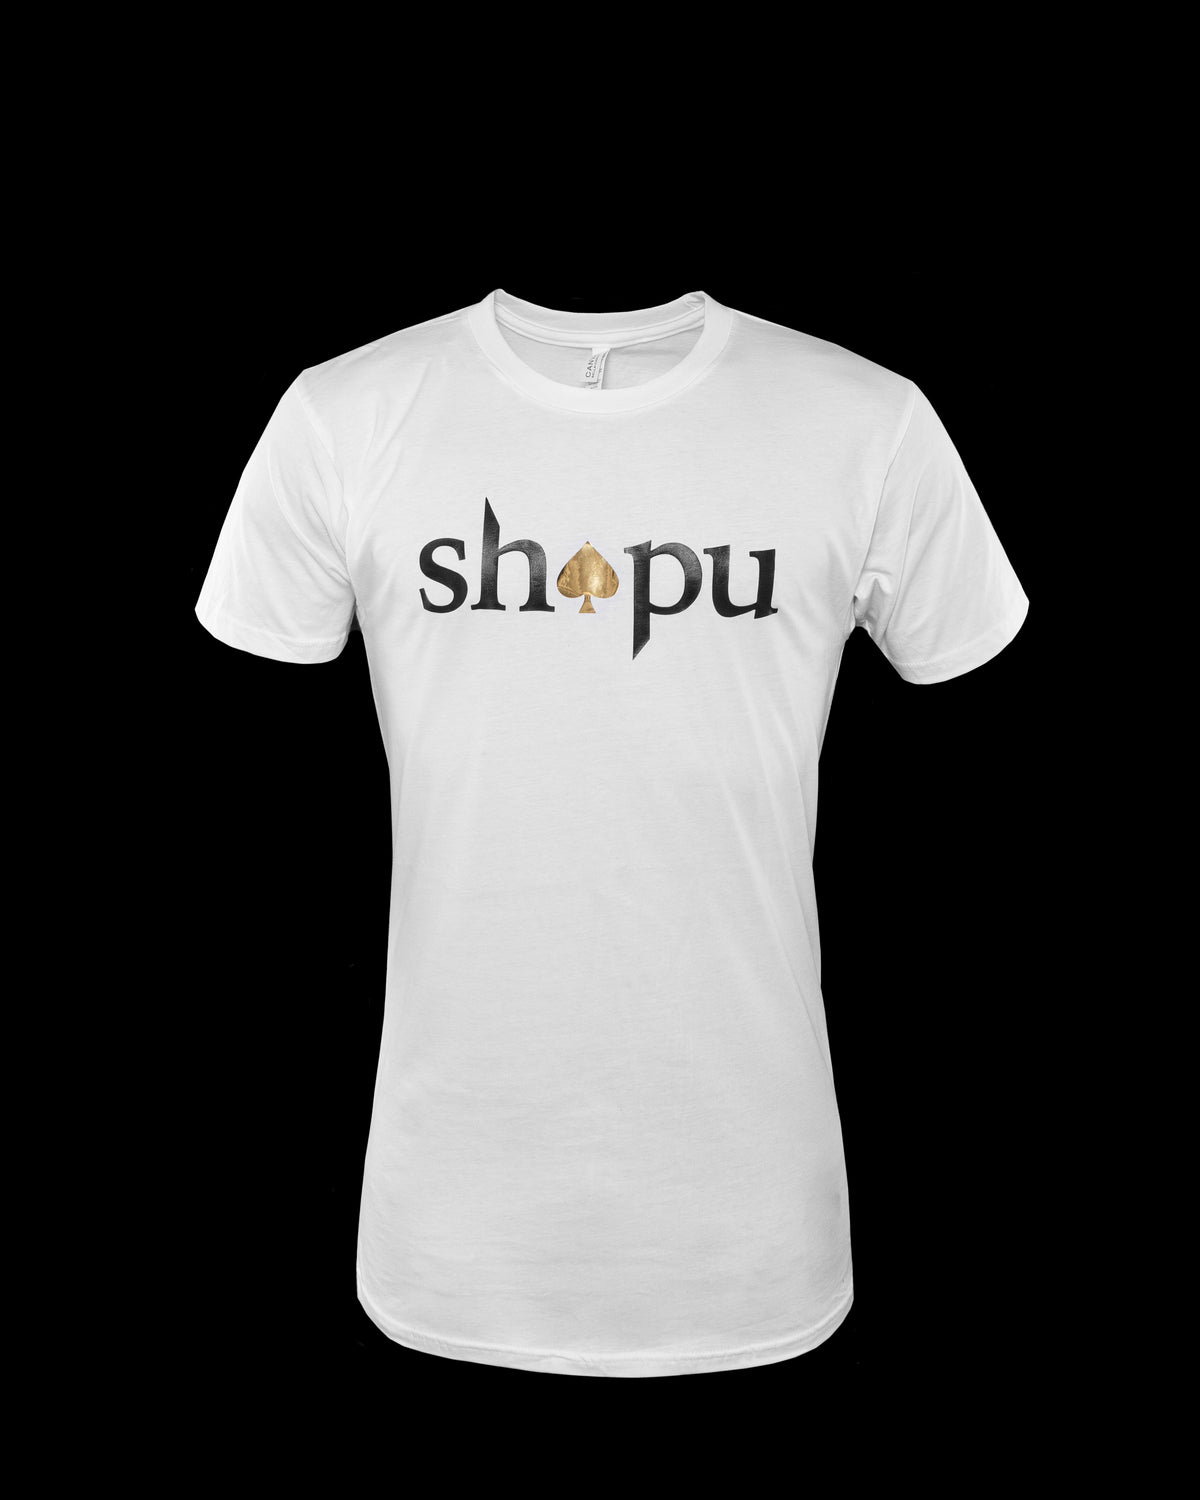 Shapu White T-Shirt